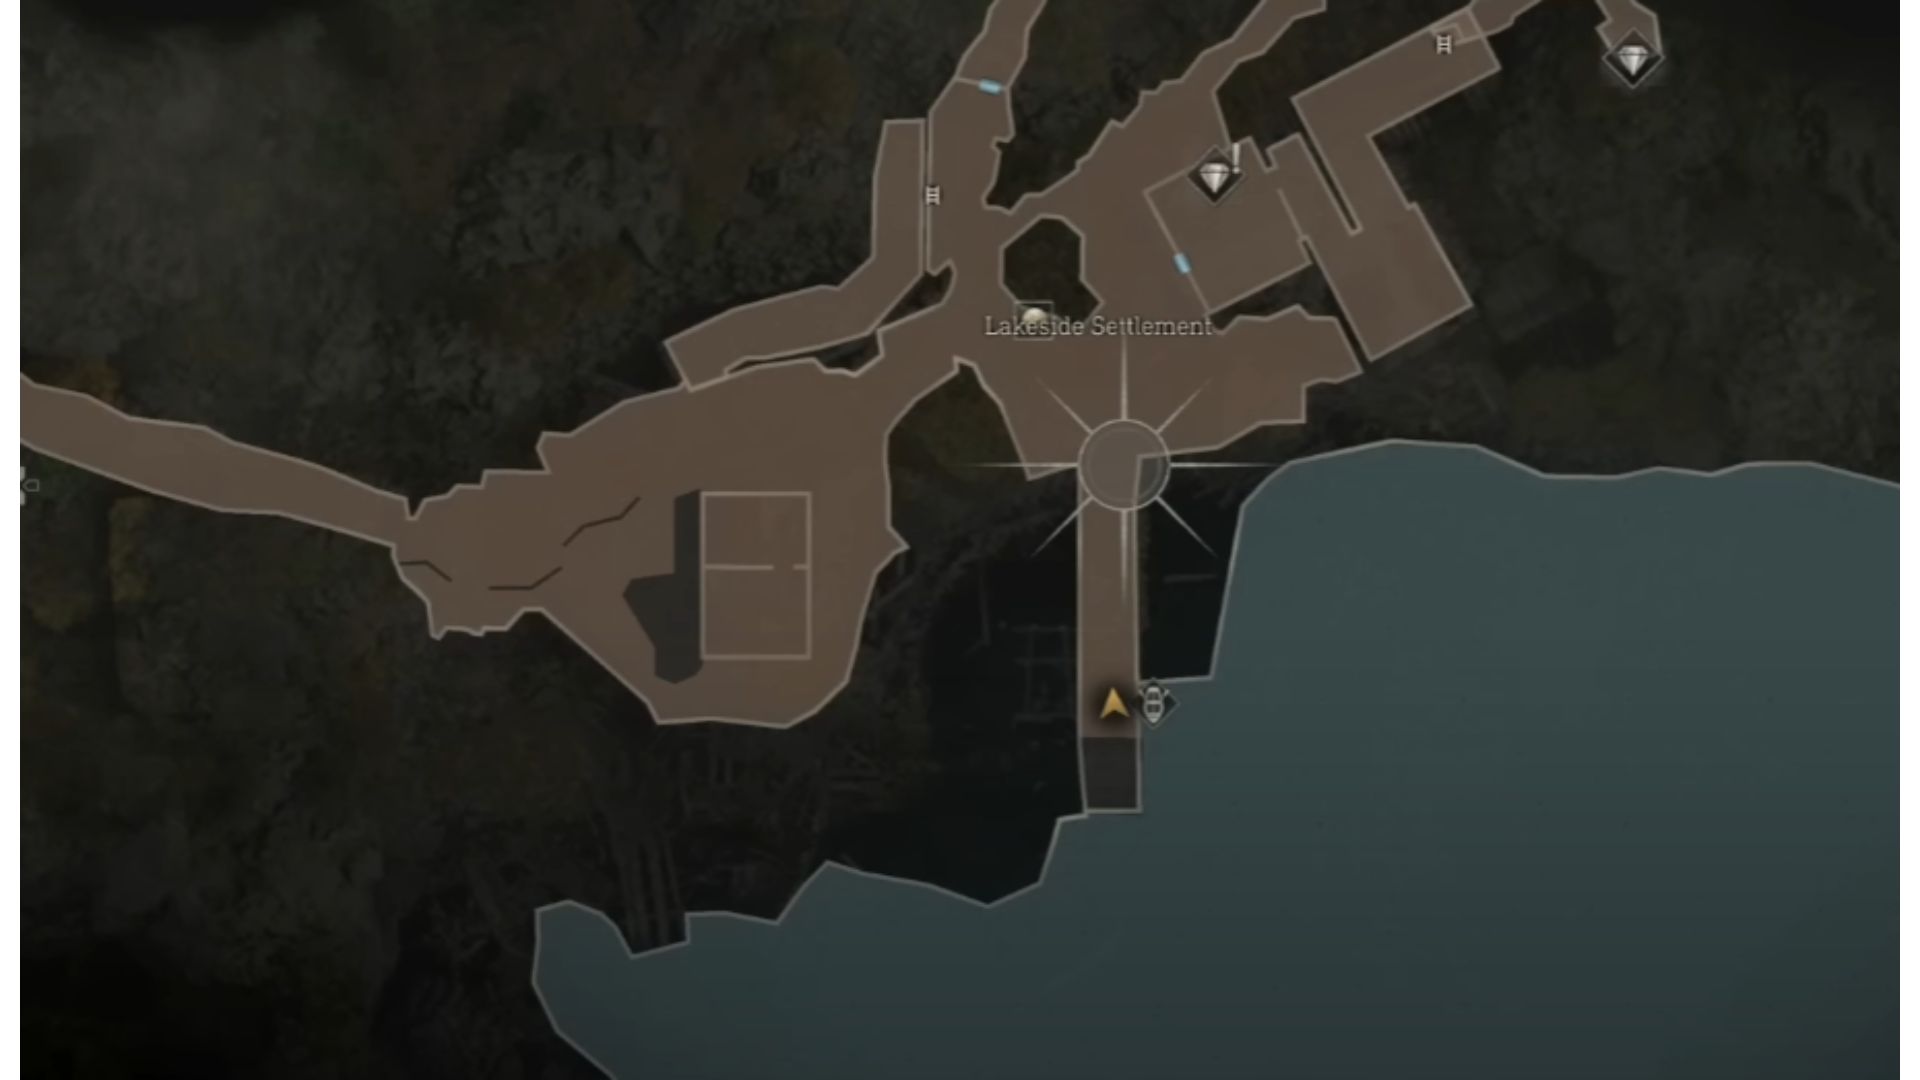 Resident Evil 4 Remake Castellan locations: The map shows the Castellan location